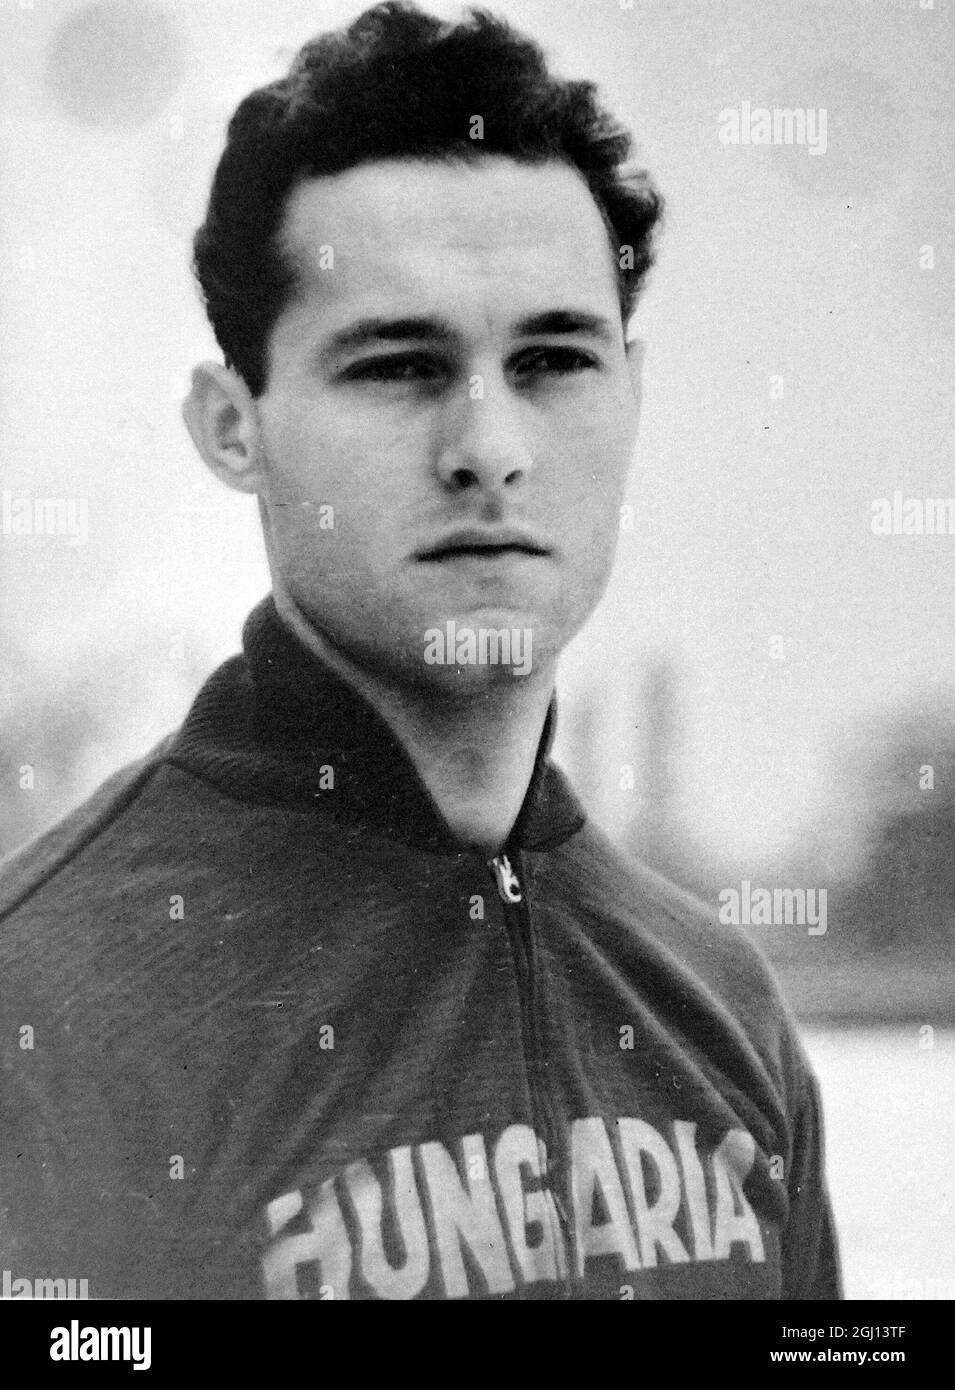 ANTAL SZENTMIHALYI - PORTRAIT OF FOOTBALLER - HUNGARIAN INTERNATIONA FOOTBALL PLAYER ; 11 MAY 1962 Stock Photo